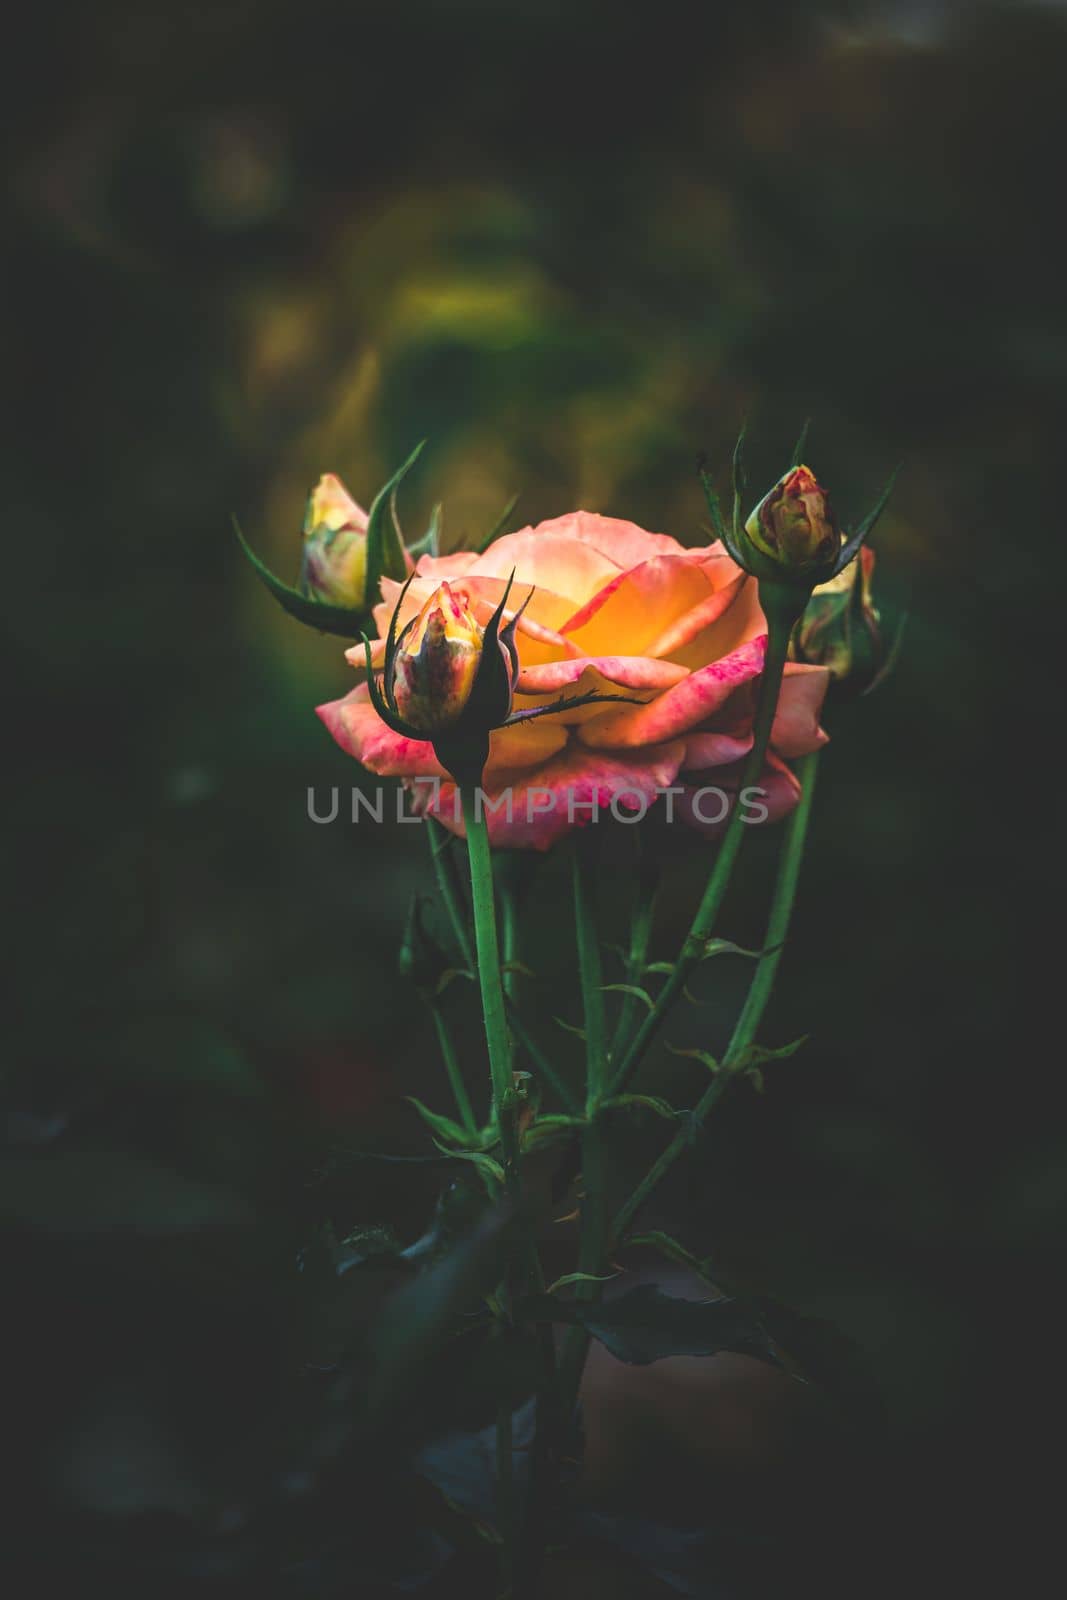 Garden rose, Yellow rose, Rose in the garden, selective focus, blur background